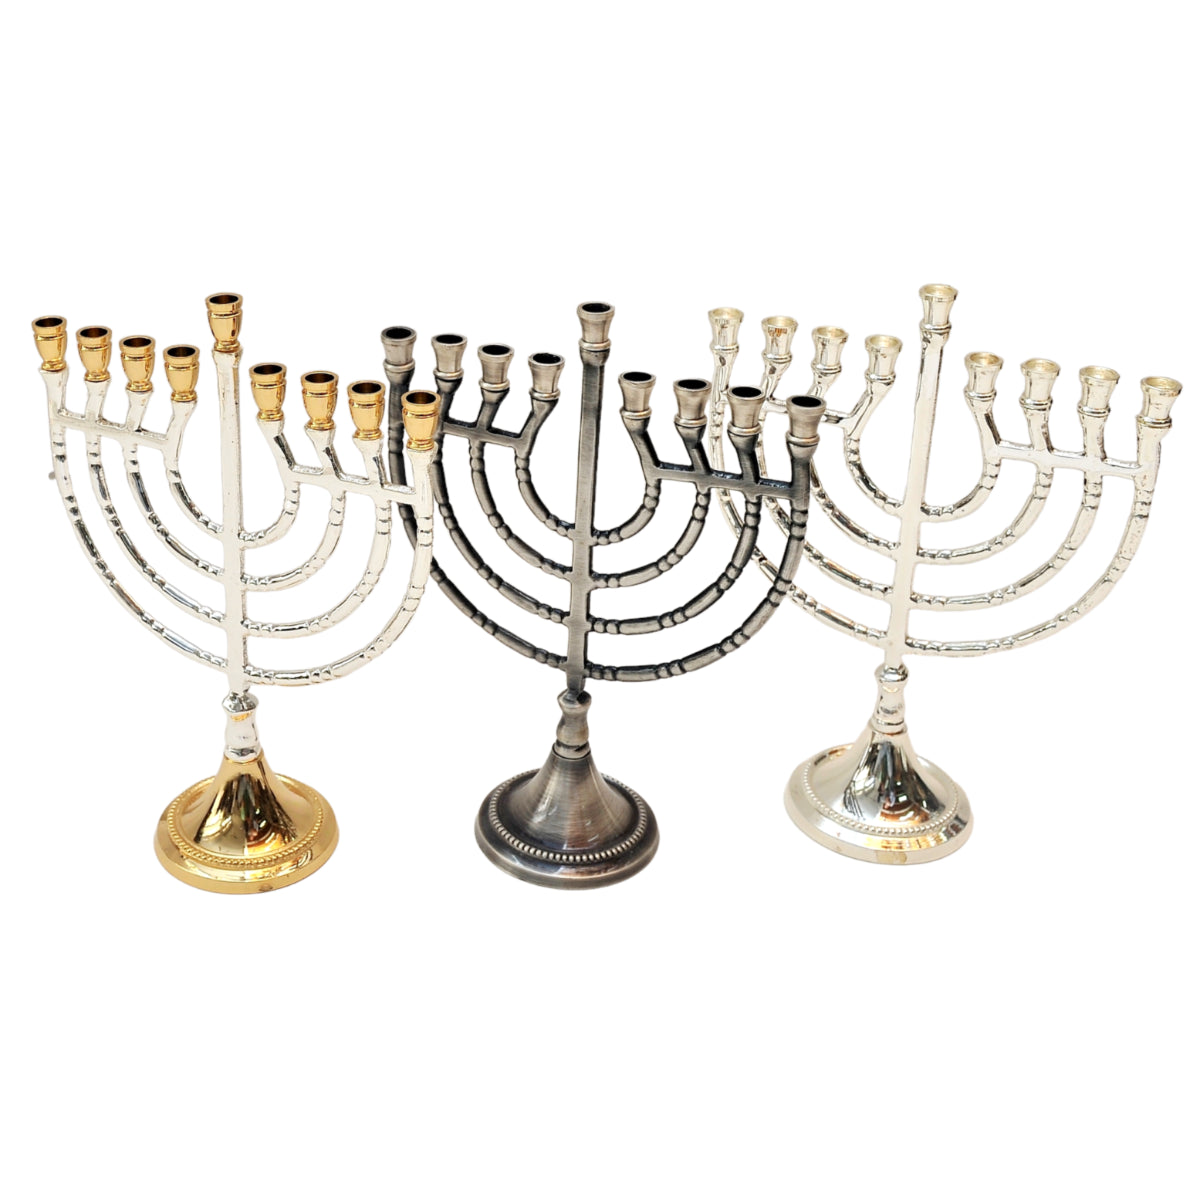 Temple Menorah Hanukkiah Candle Holder from Jerusalem size 21 cm / 8.25 inch